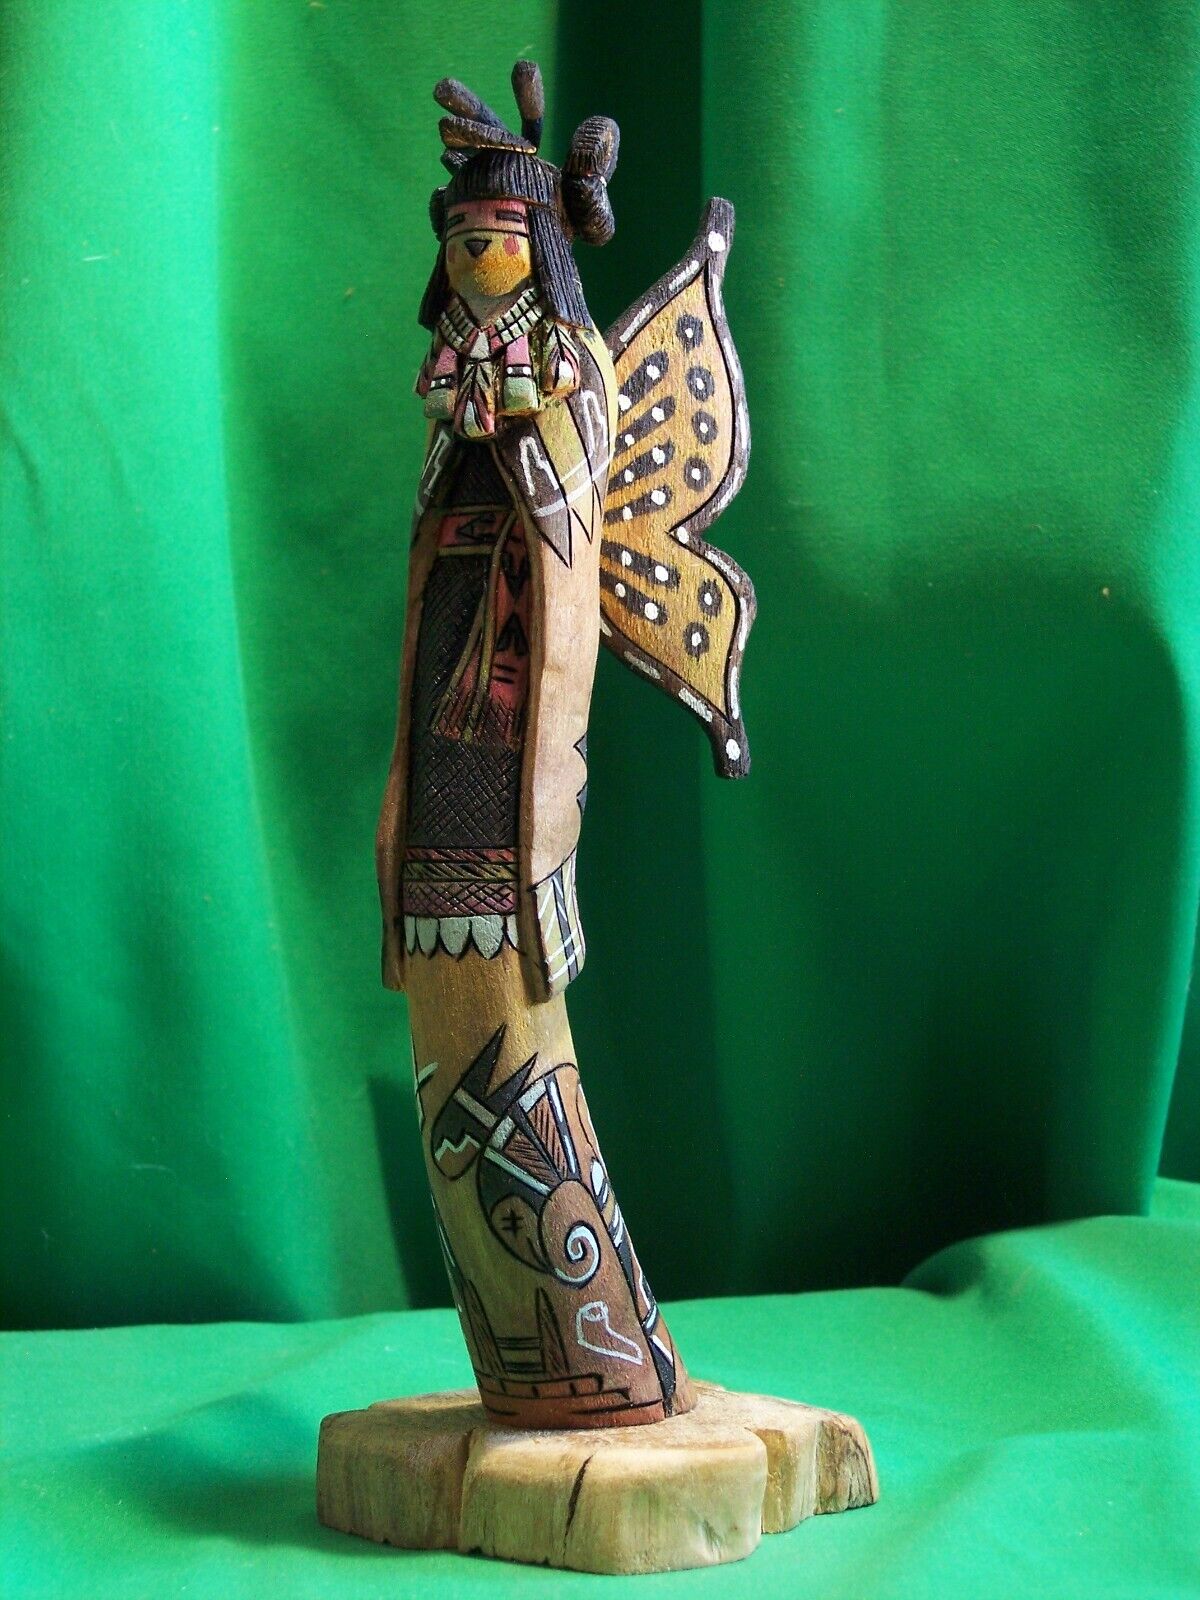 Hopi Kachina Doll - The Butterfly Kachina by Wally Grover - Beautiful